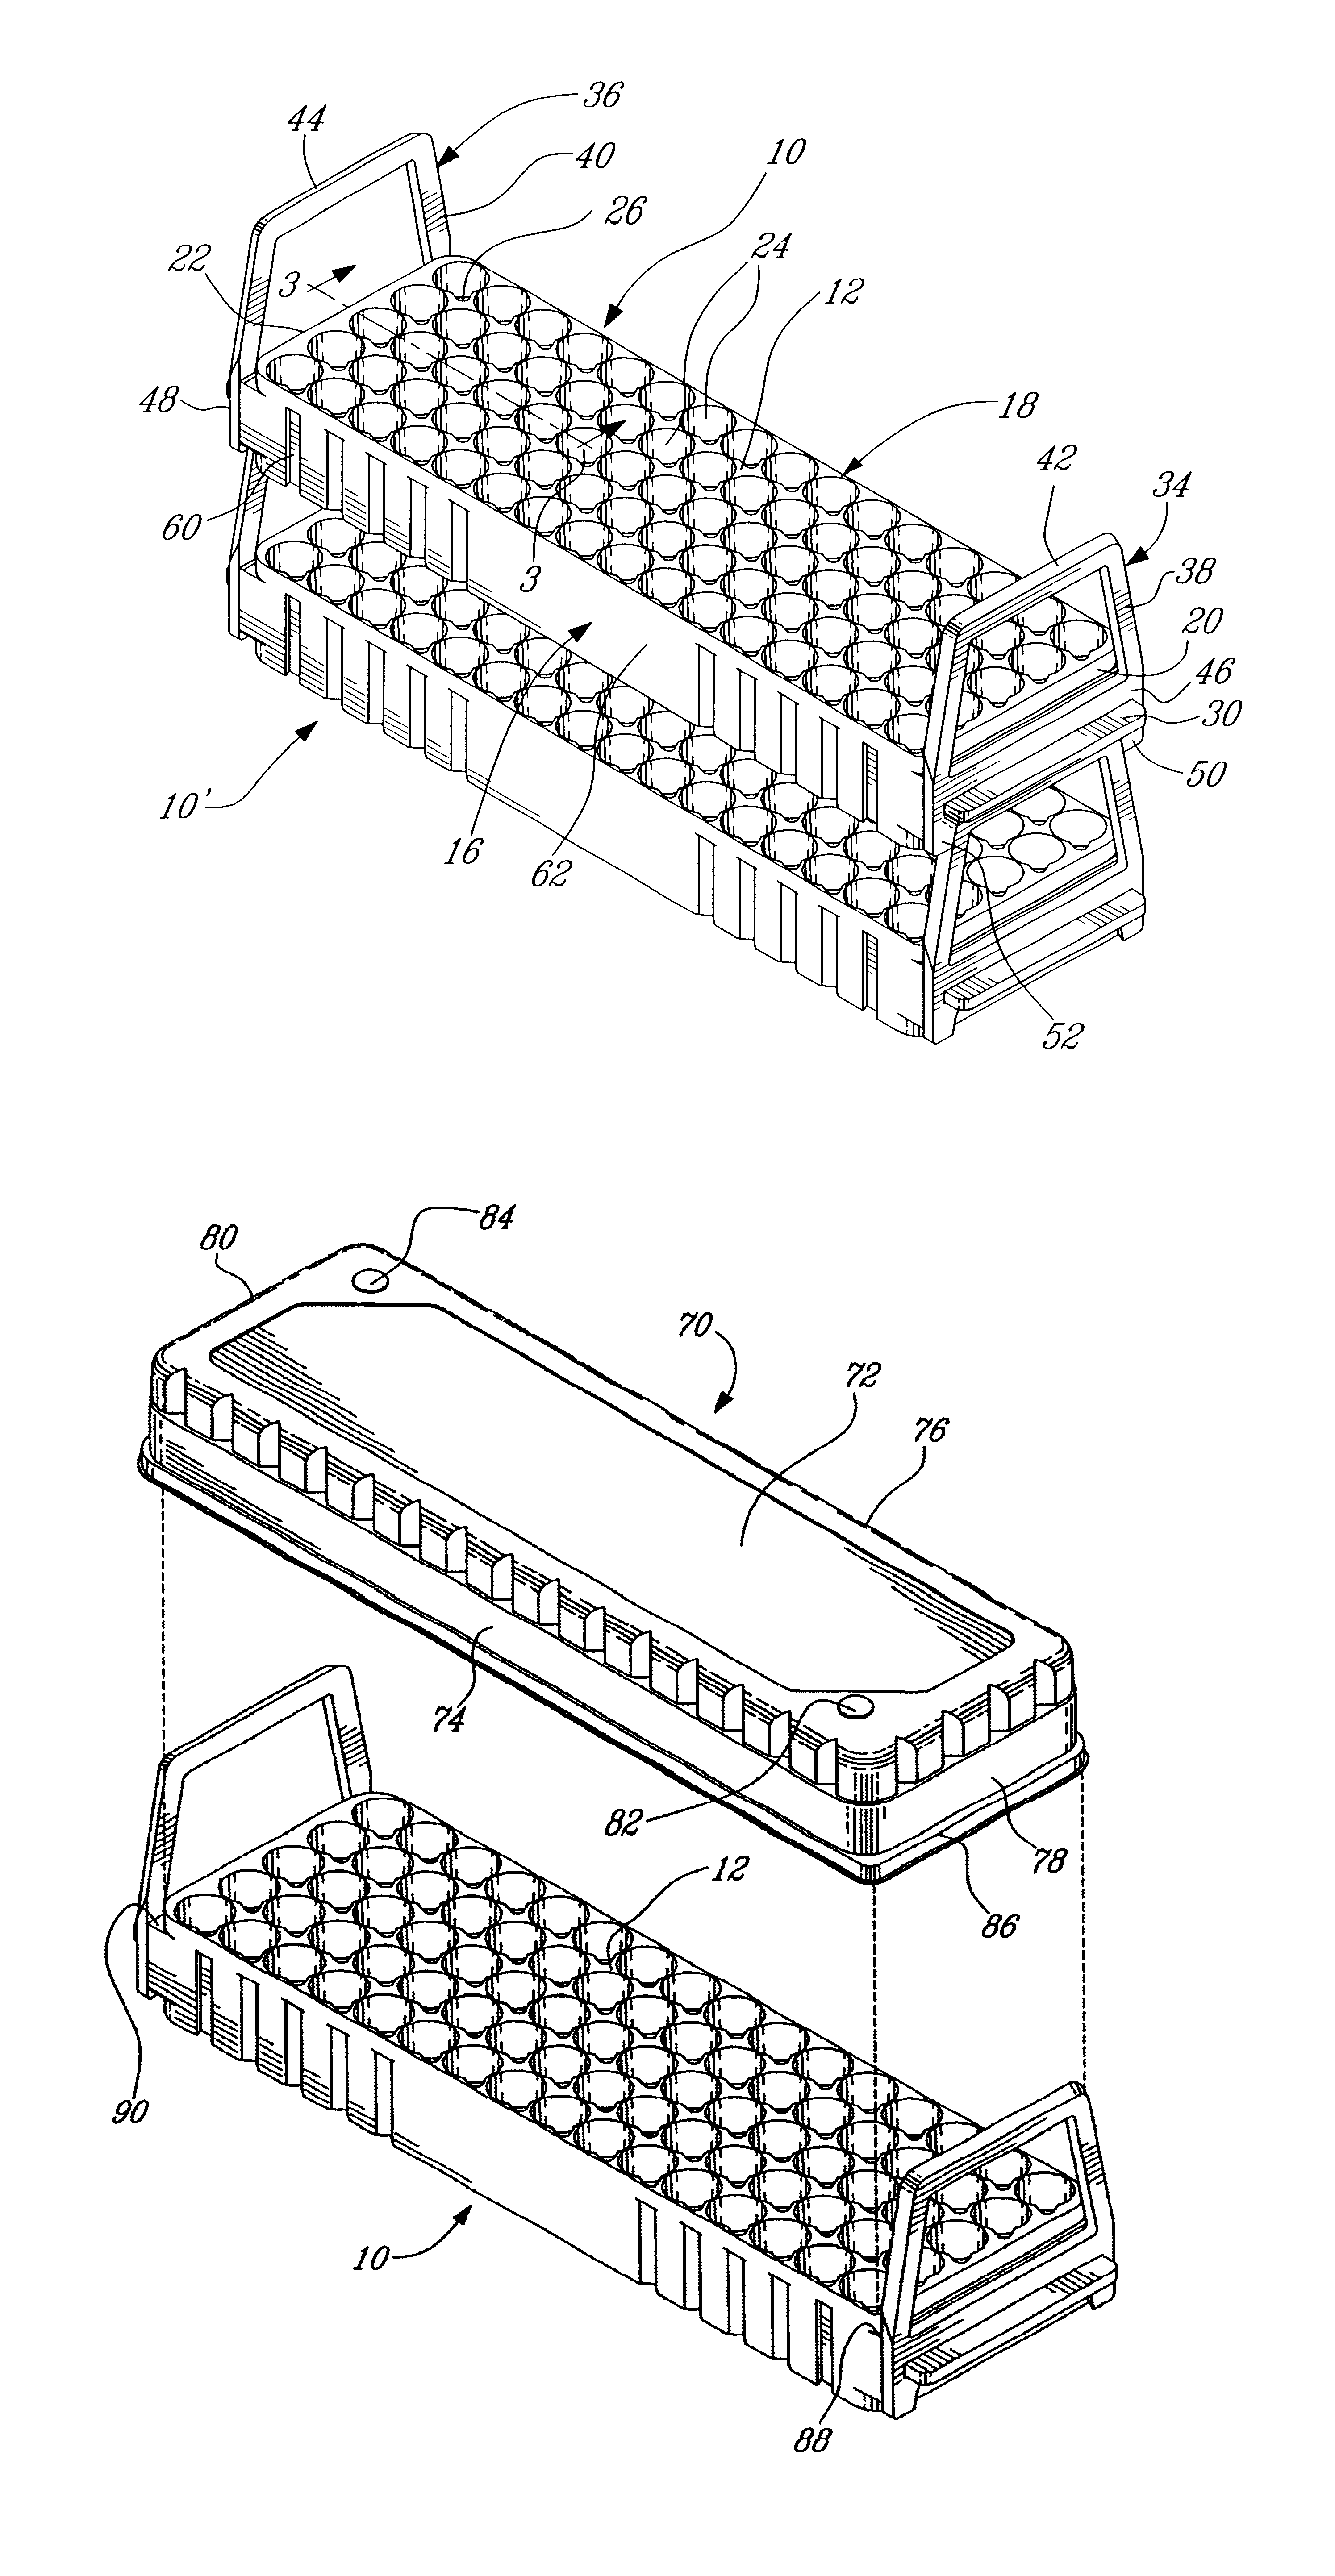 Modular test tube rack